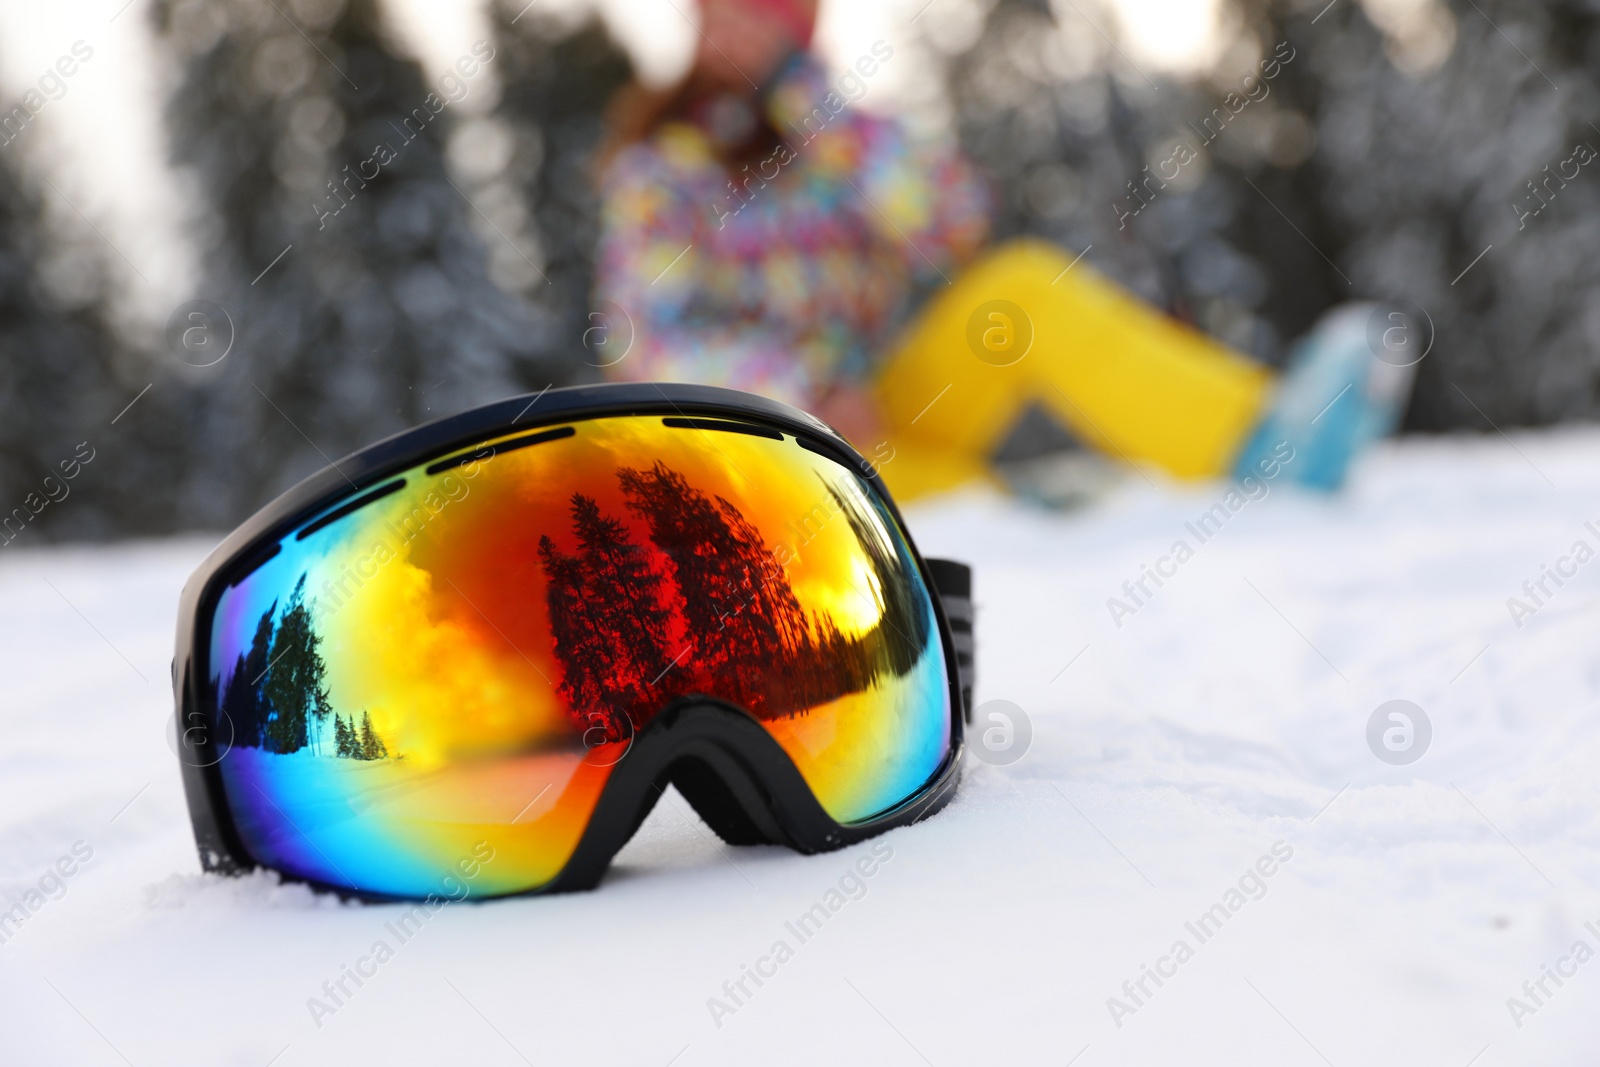 Photo of Stylish ski goggles on snow outdoors. Winter sport equipment